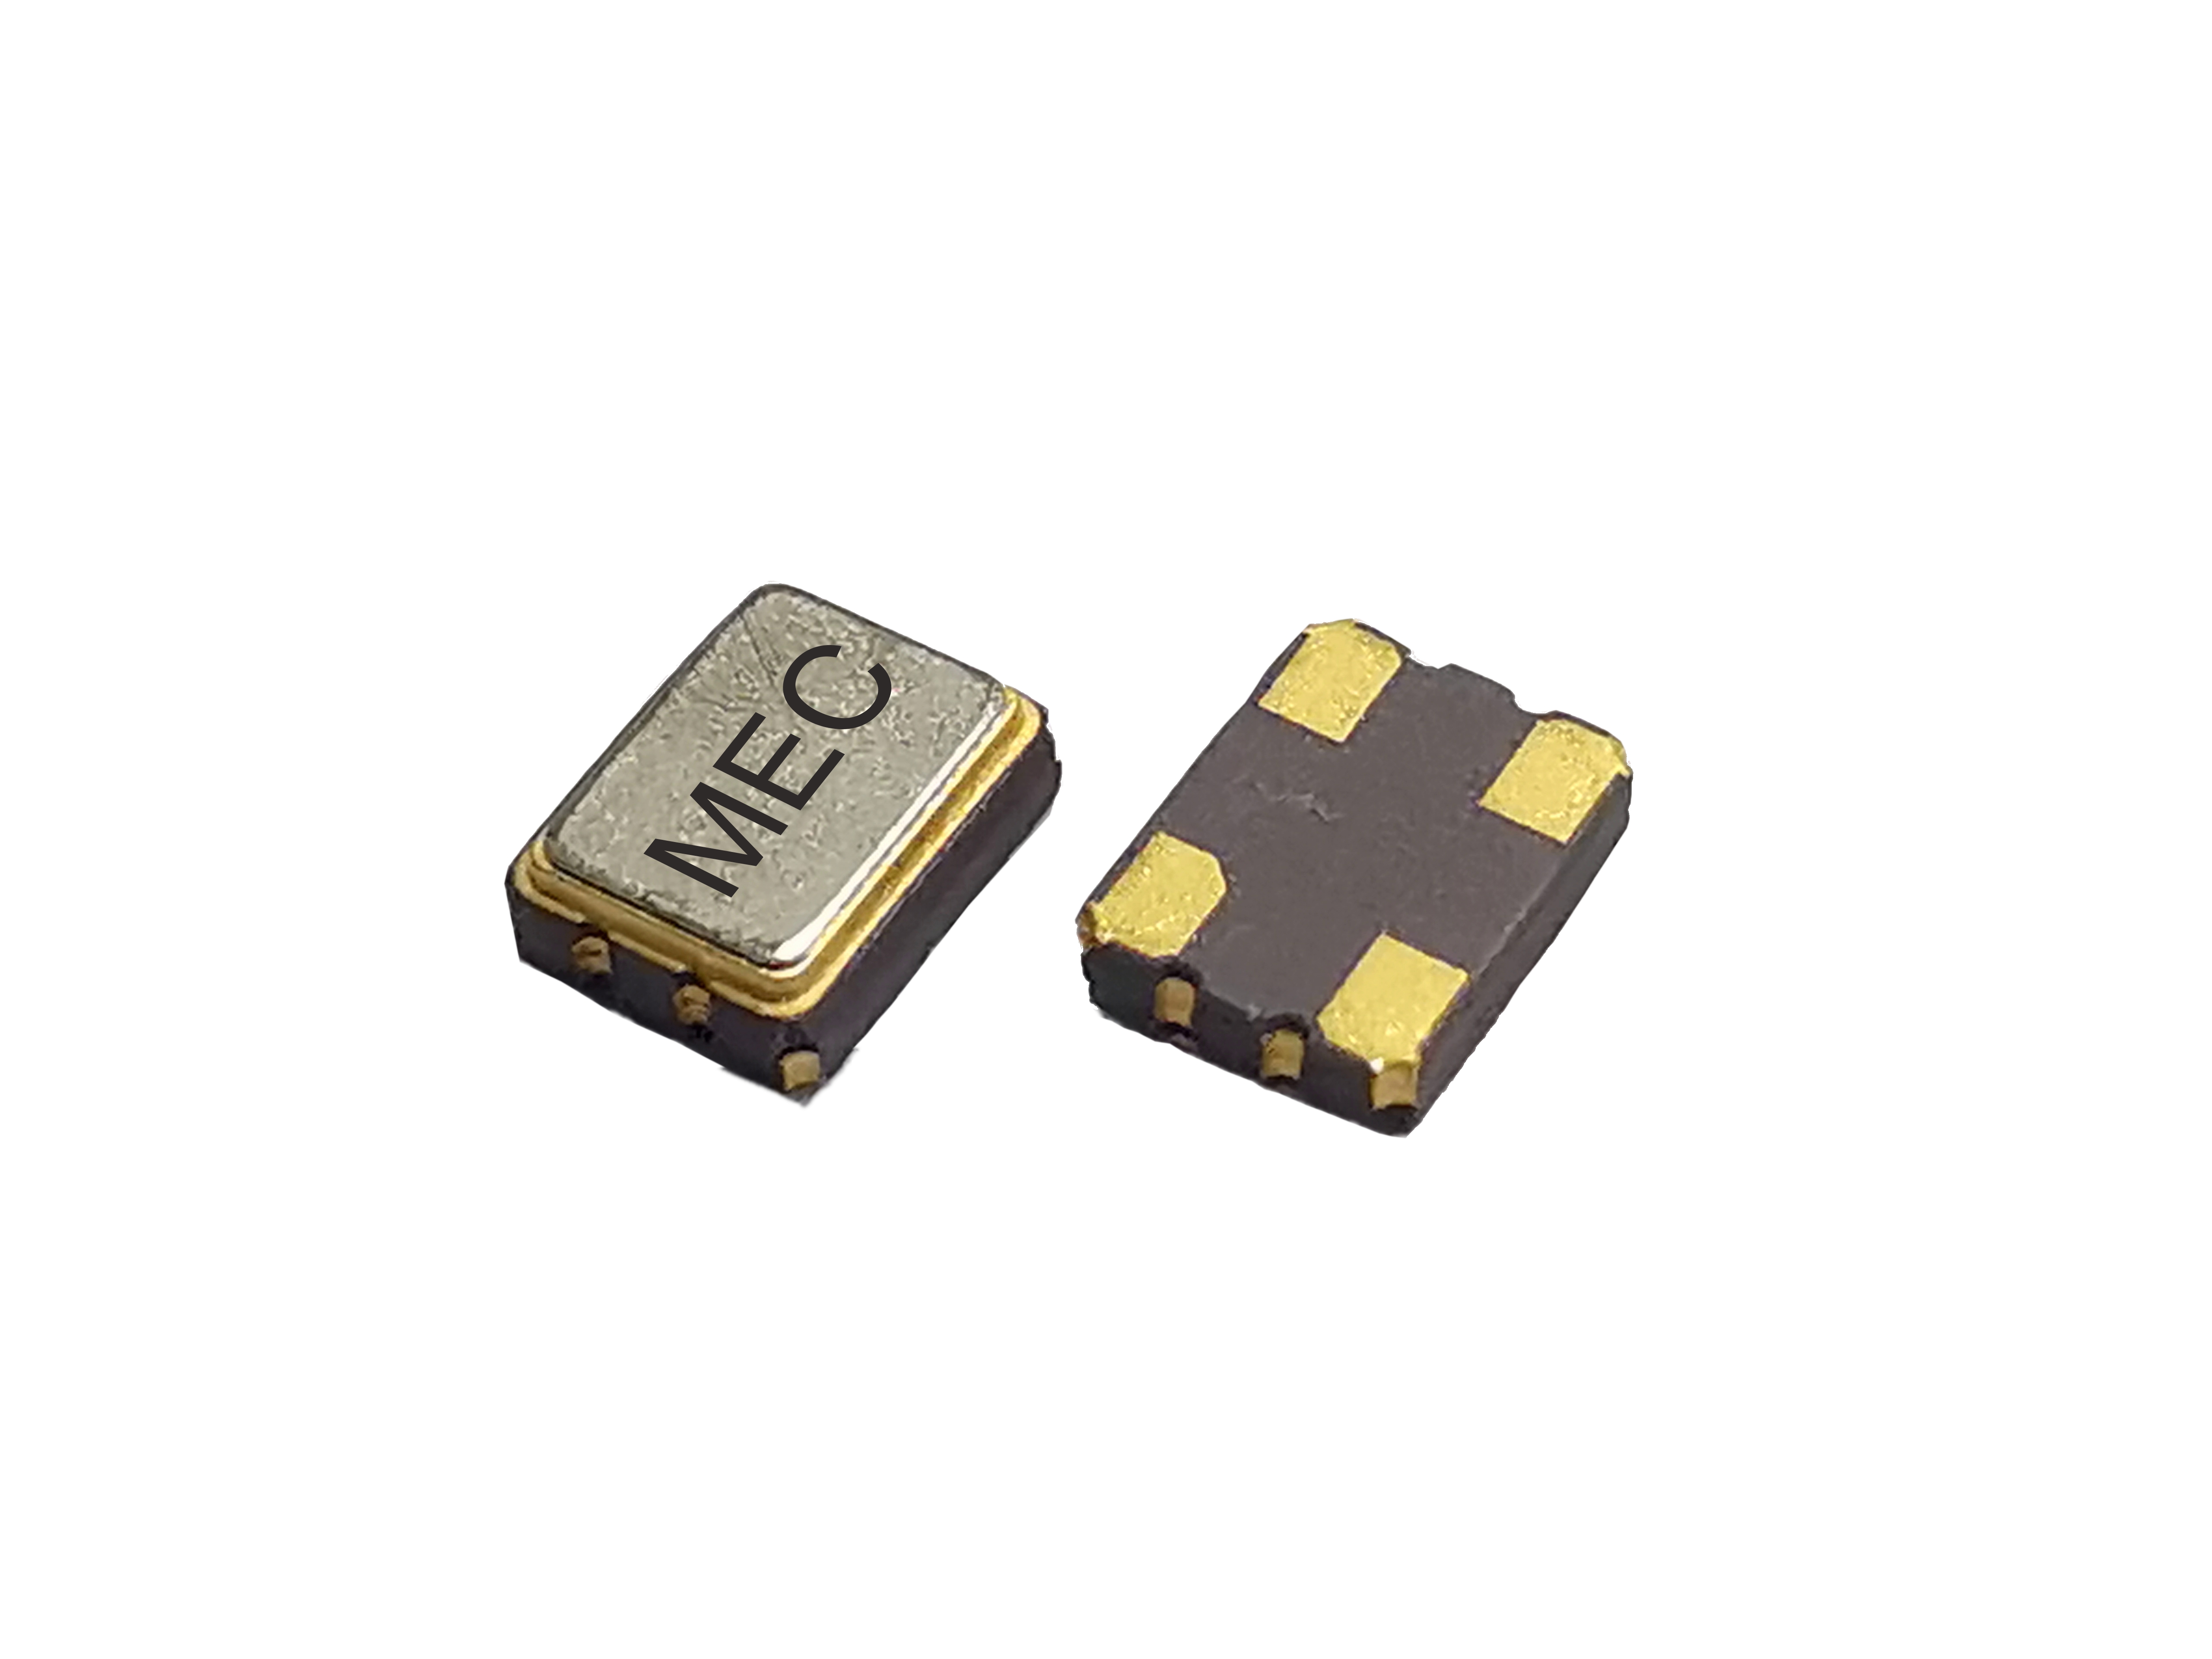 HA32 3225 1.8V 32.768KHz uA Low Current Consumption CMOS SMD Crystal Oscillator